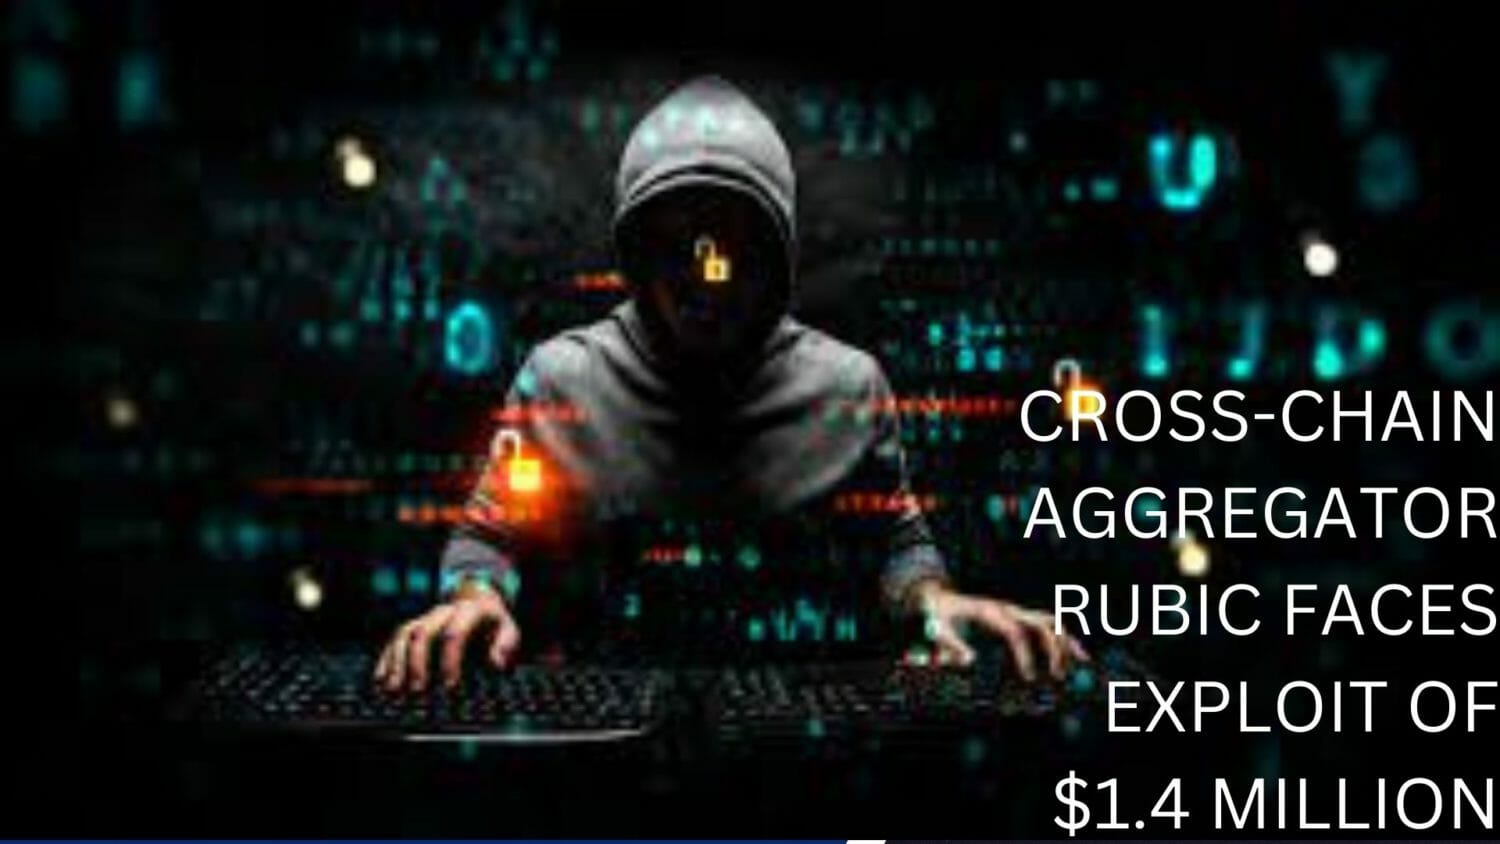 Cross-Chain Aggregator Rubic Faces Exploit Of $1.4 Million